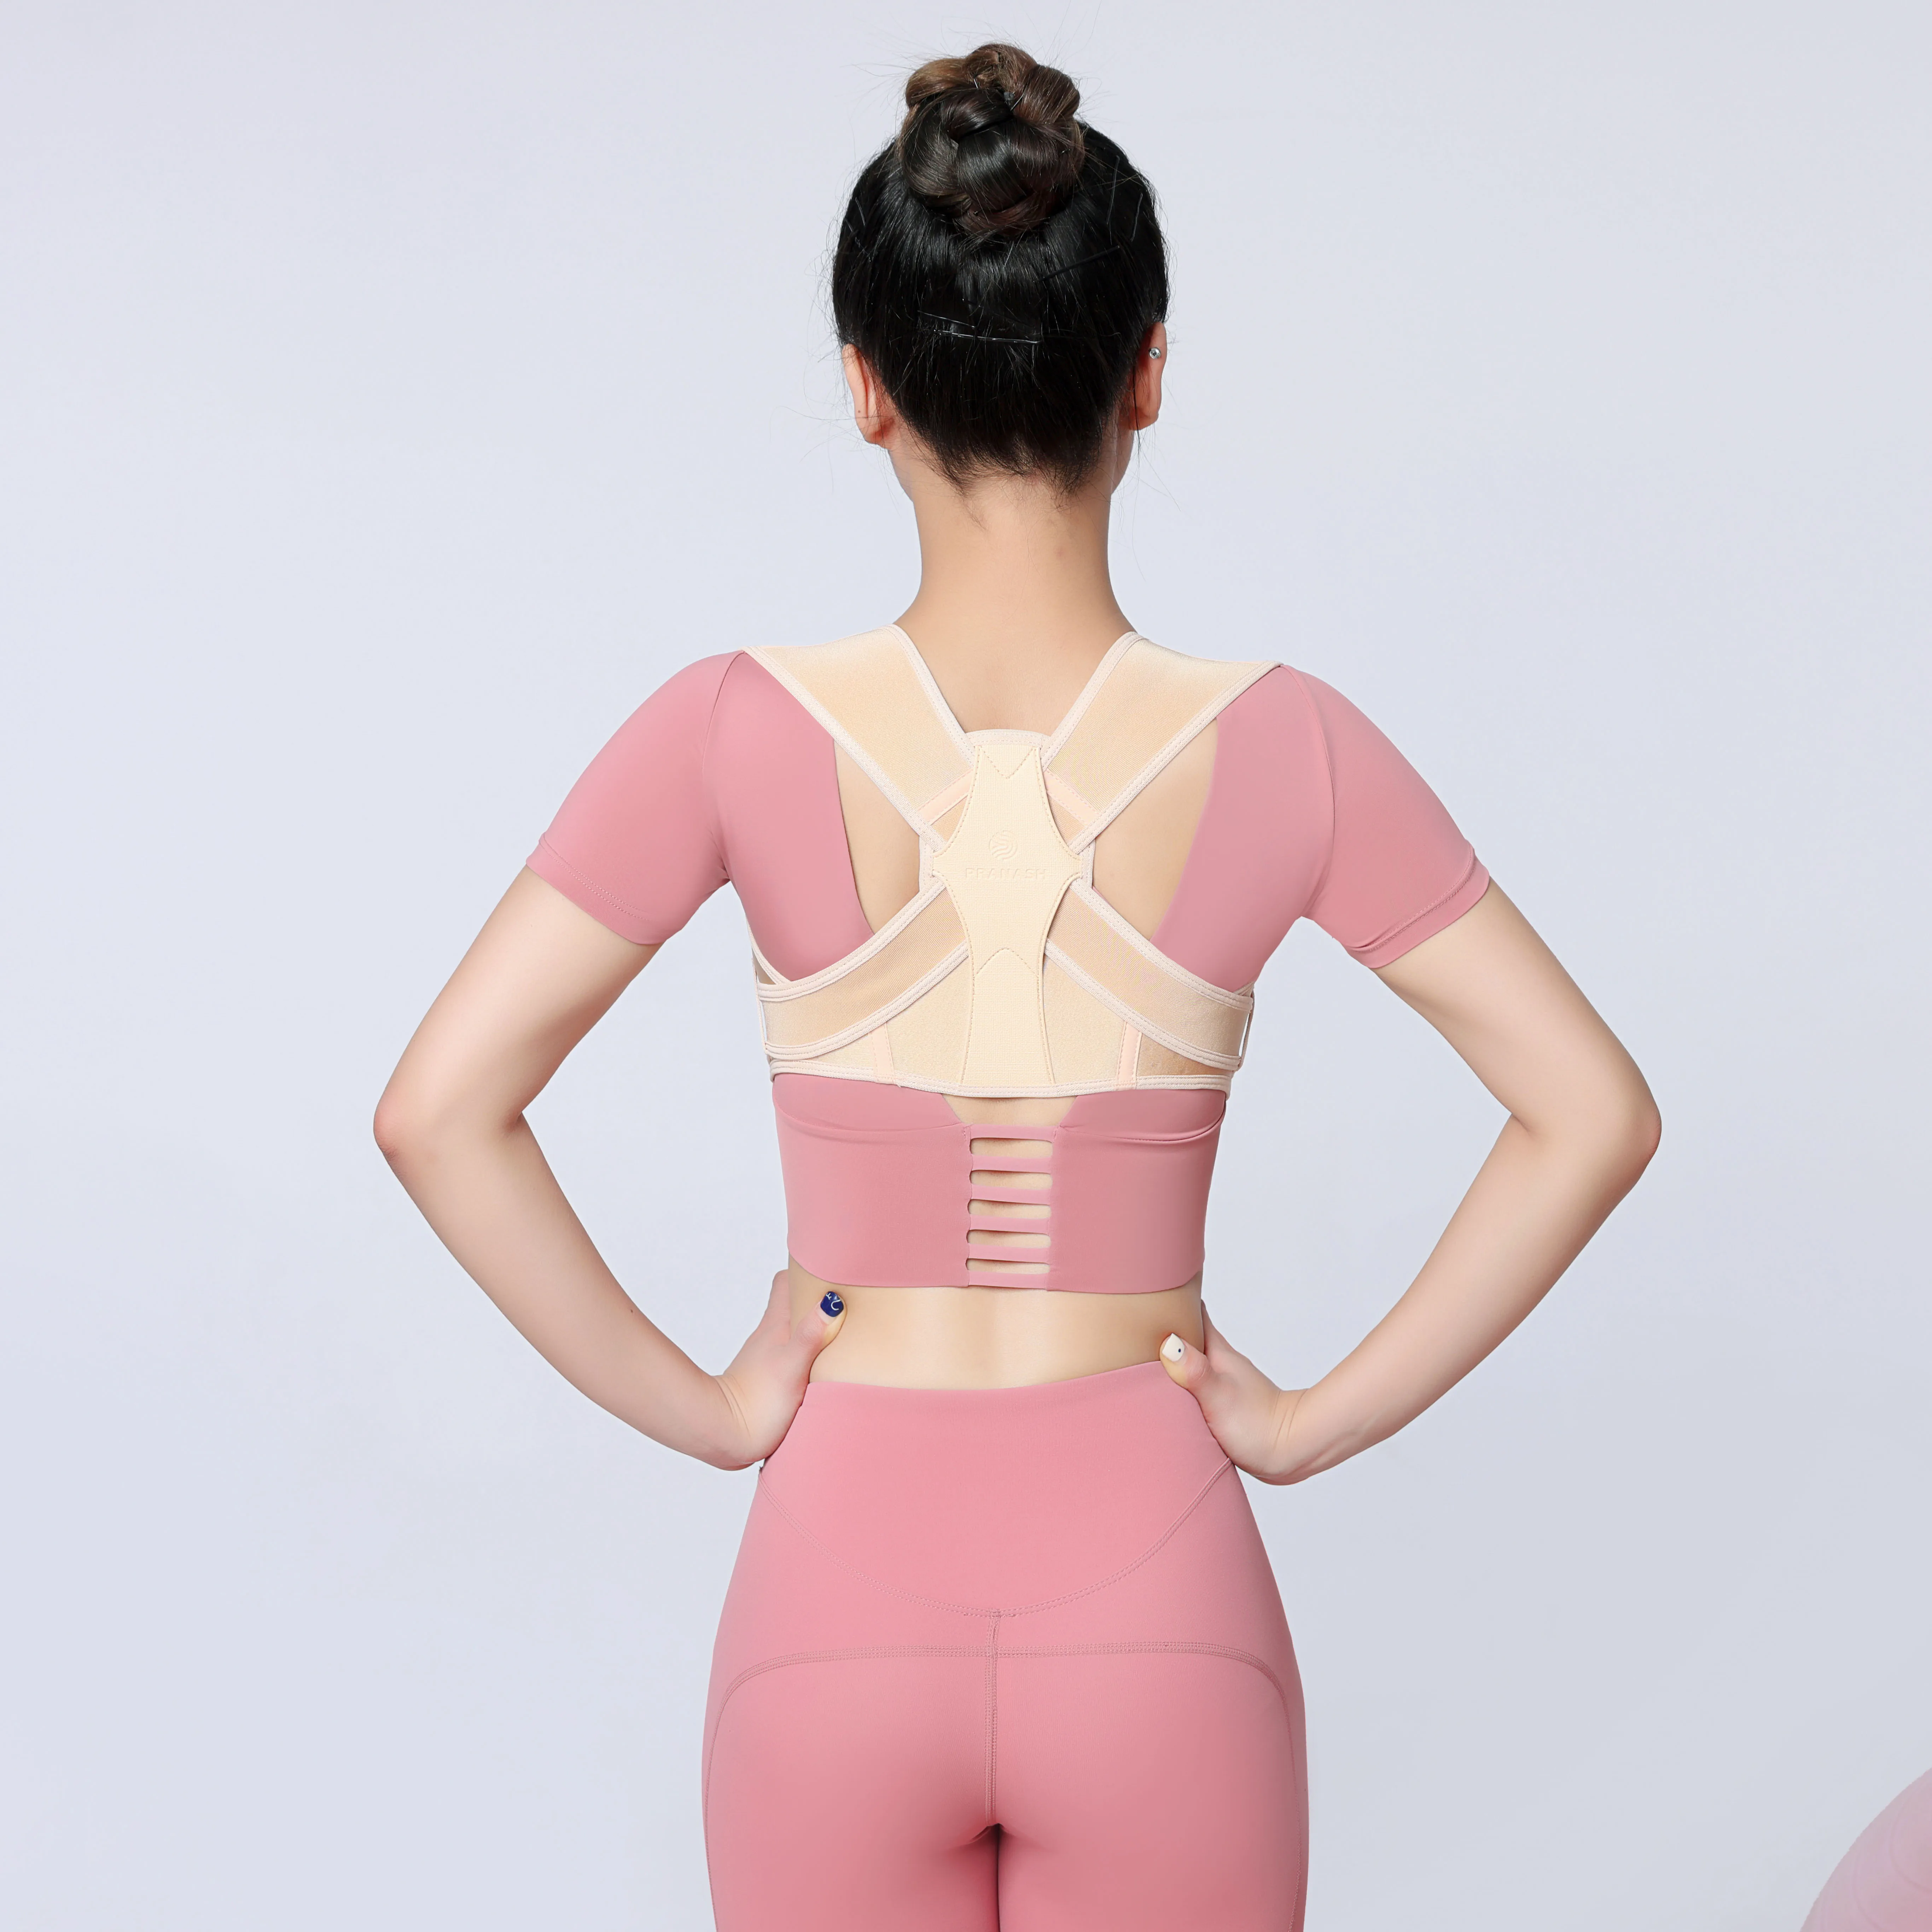 

InStock New Design posture corrector for women Brace OEM Custom Back Support Amazon Hot Sale Posture Corrector for Men and Women, Black,pink,blue,nude